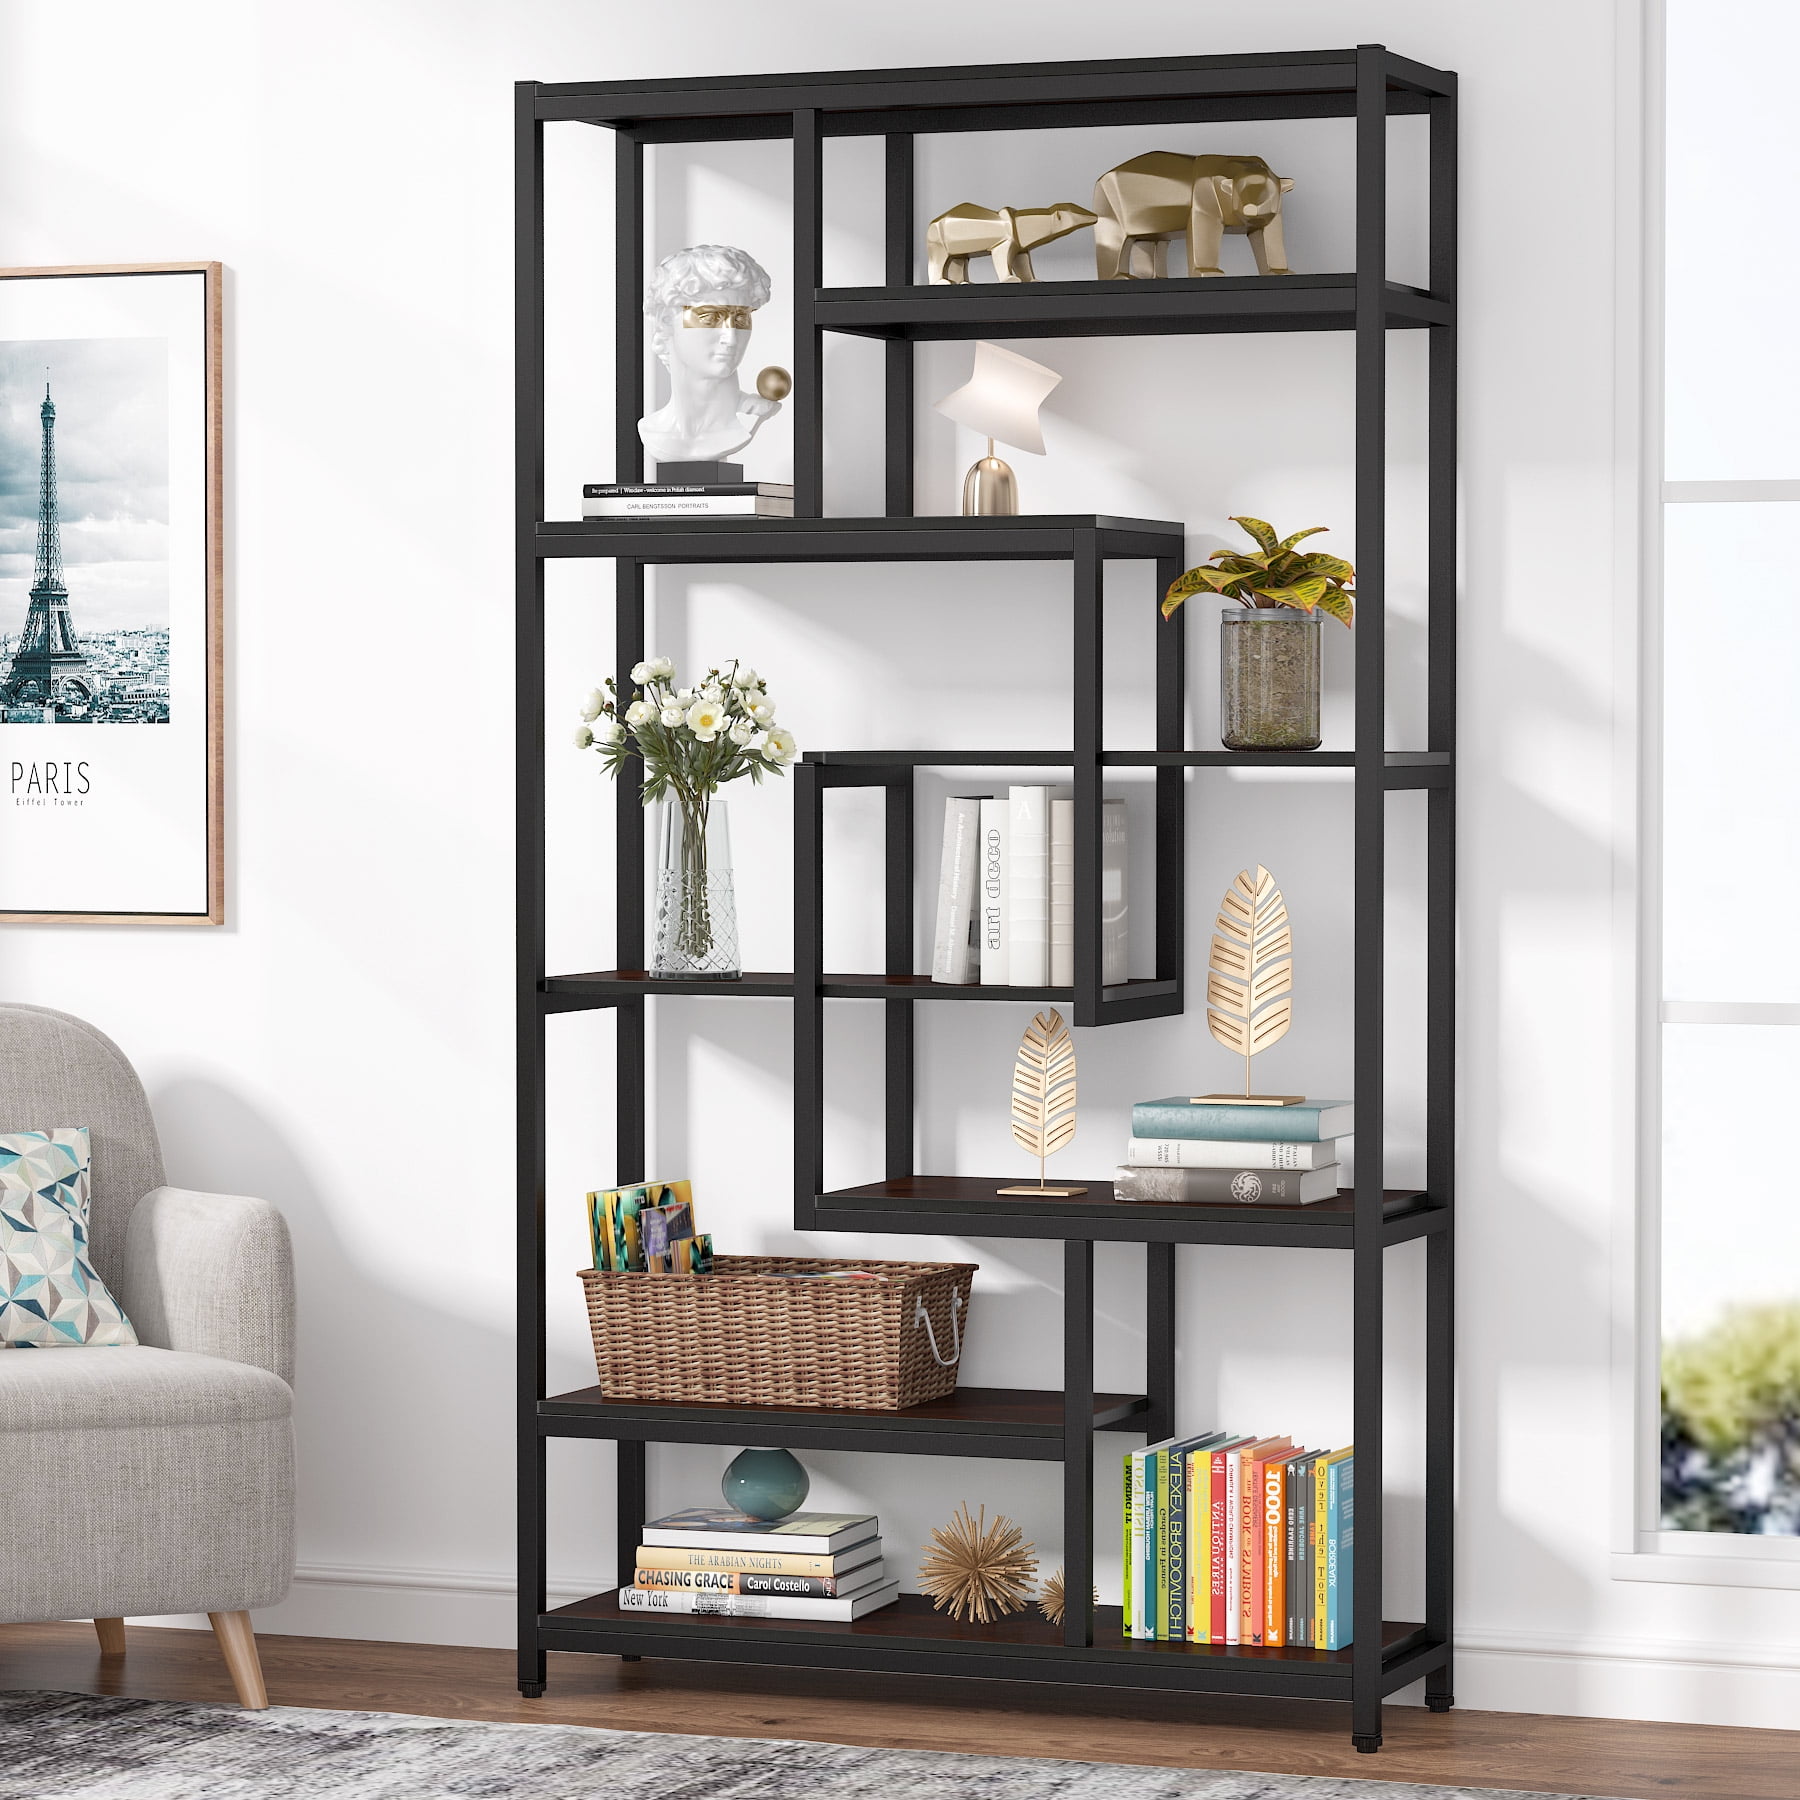 4 Tiers Bookshelf Wall Bookcase Stand Free Shelf Shelves Ladder Storage Display 